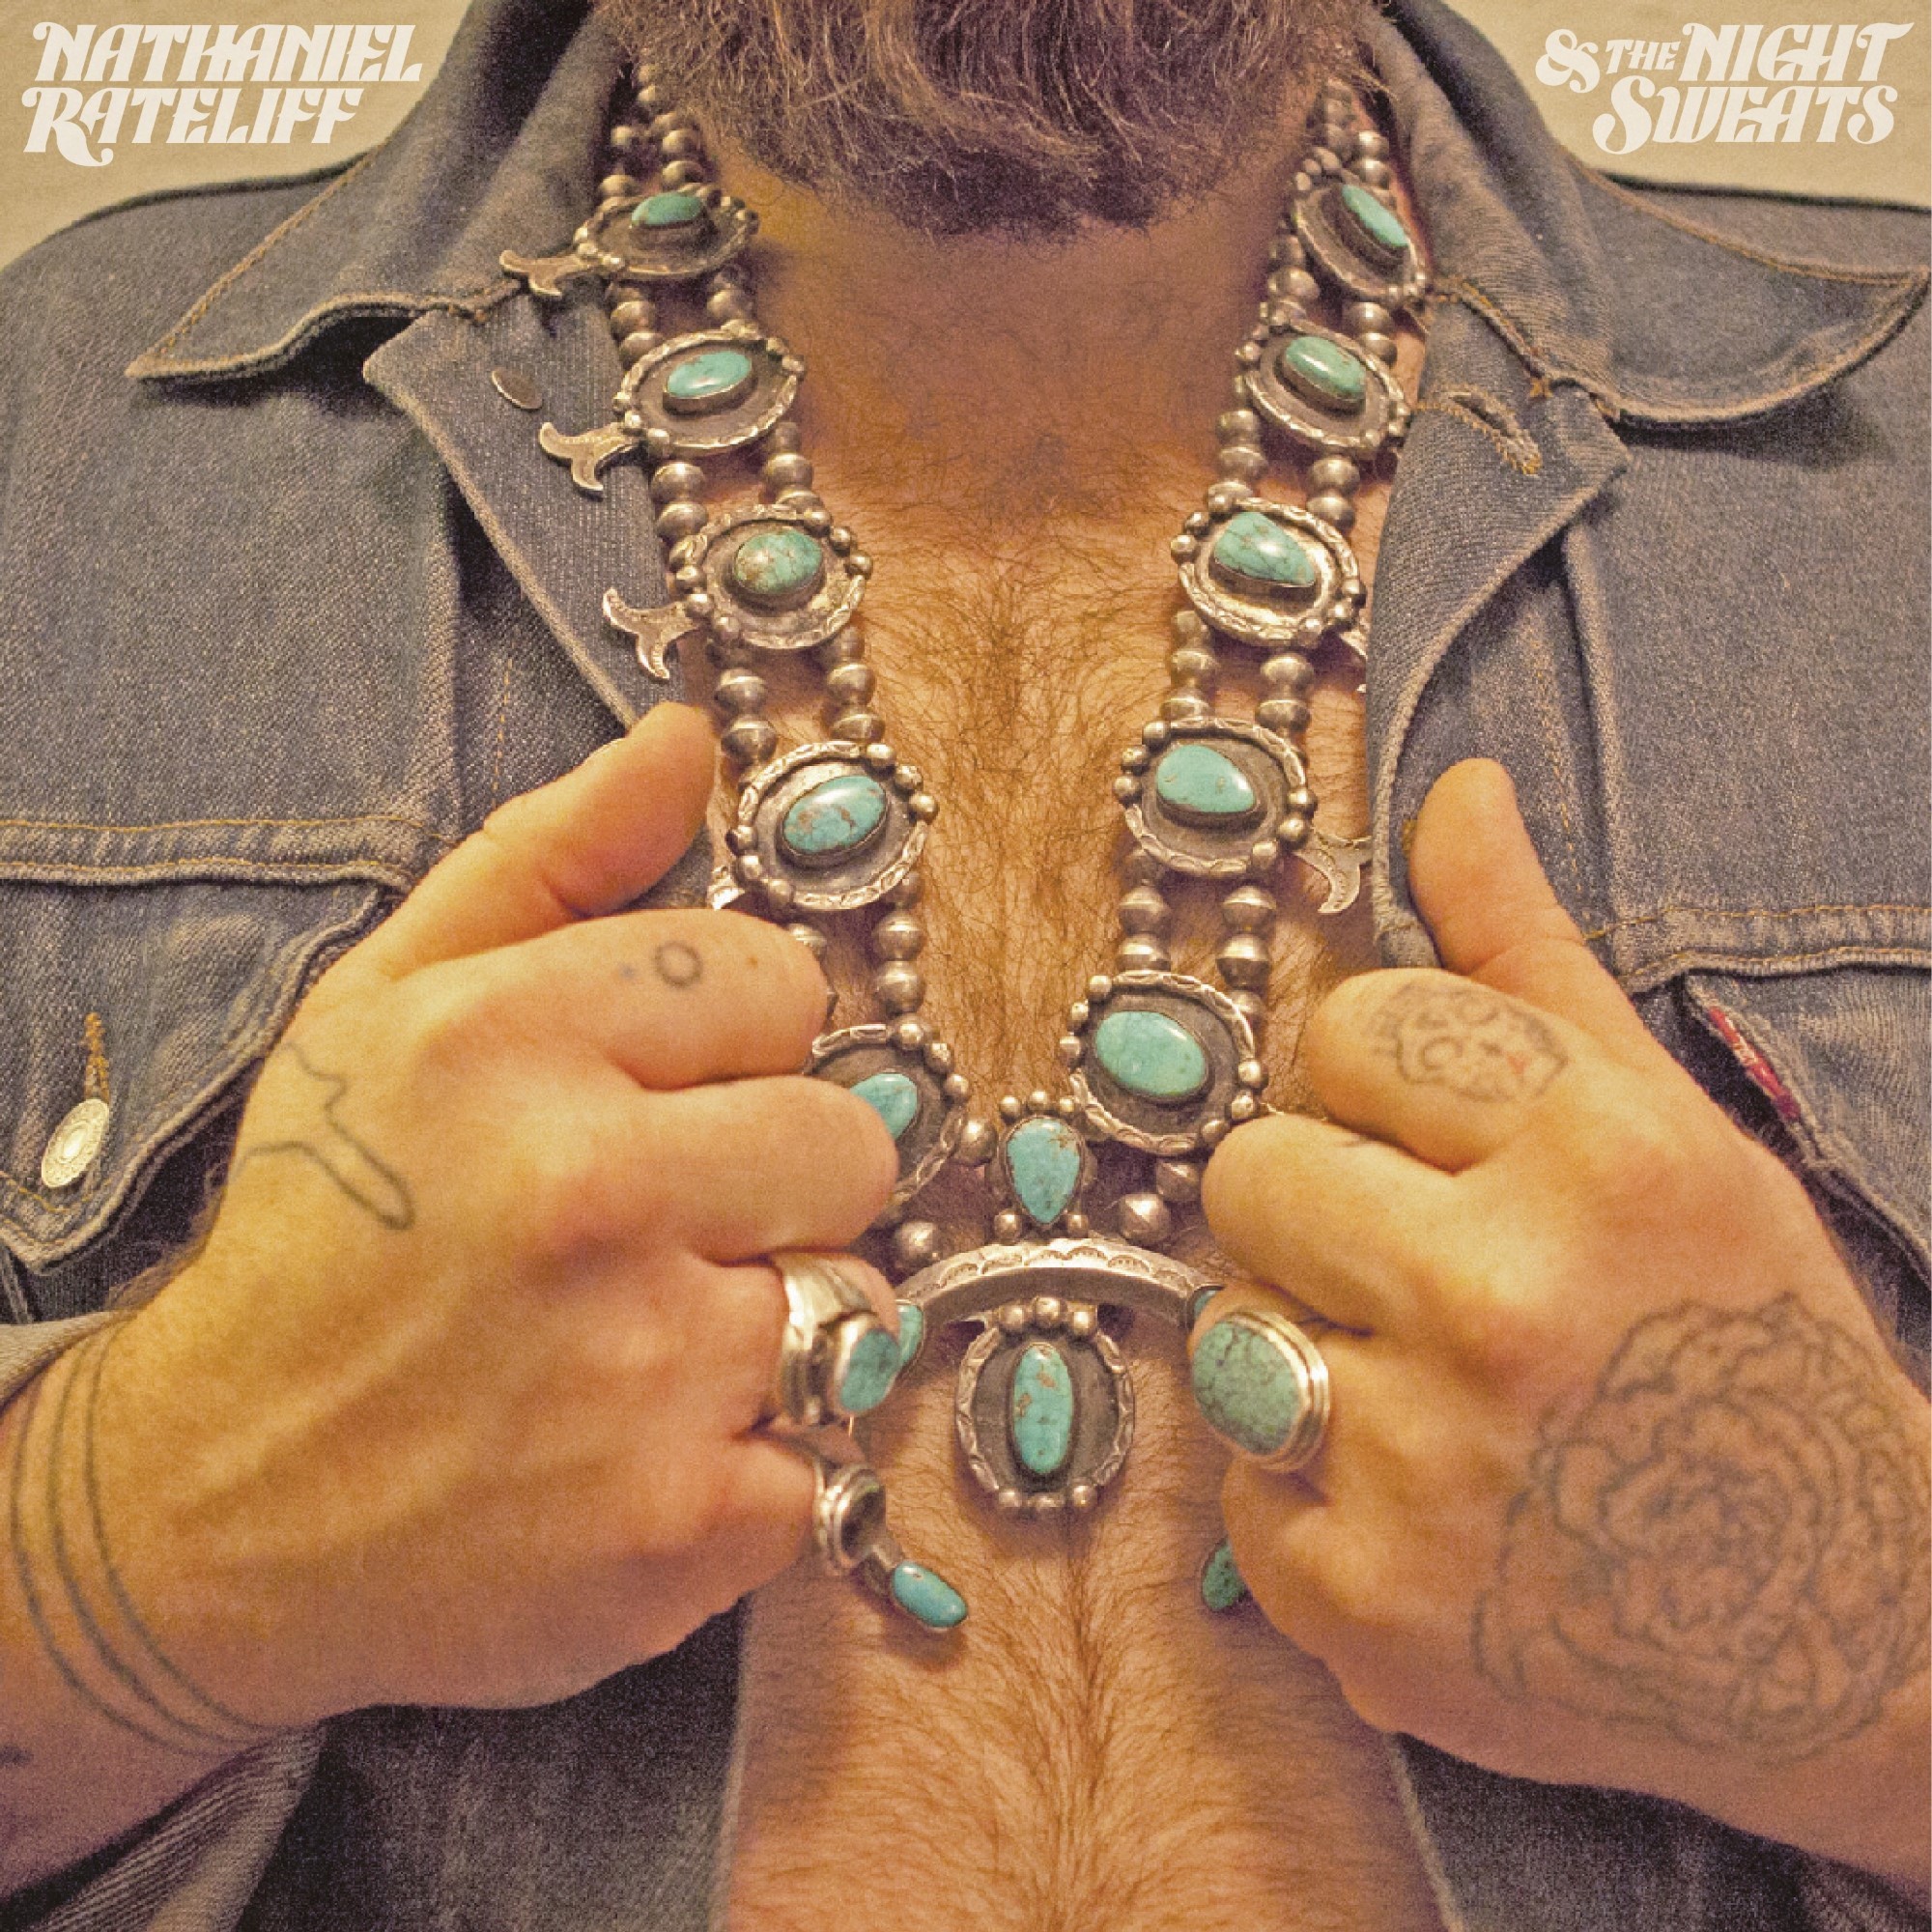 Nathaniel Rateliff & the Night Sweats|Nathaniel Rateliff/Nathaniel Rateliff & The Night Sweats